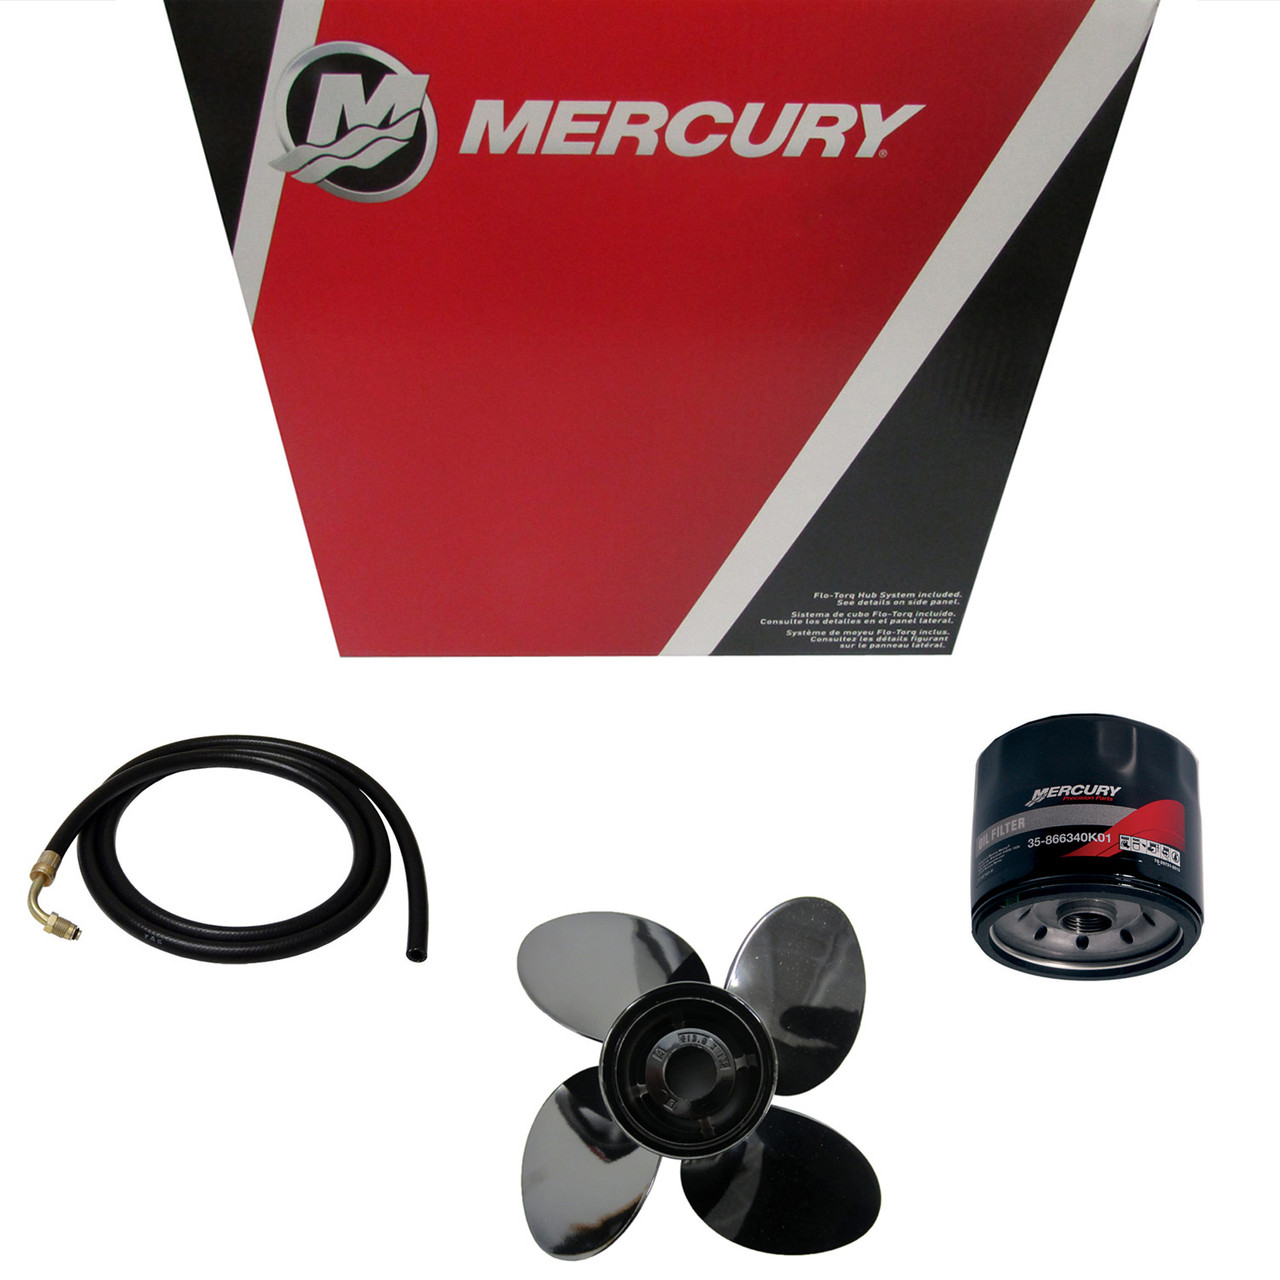 Mercury Marine / Mercruiser New OEM Block-Shift Cable, 828094